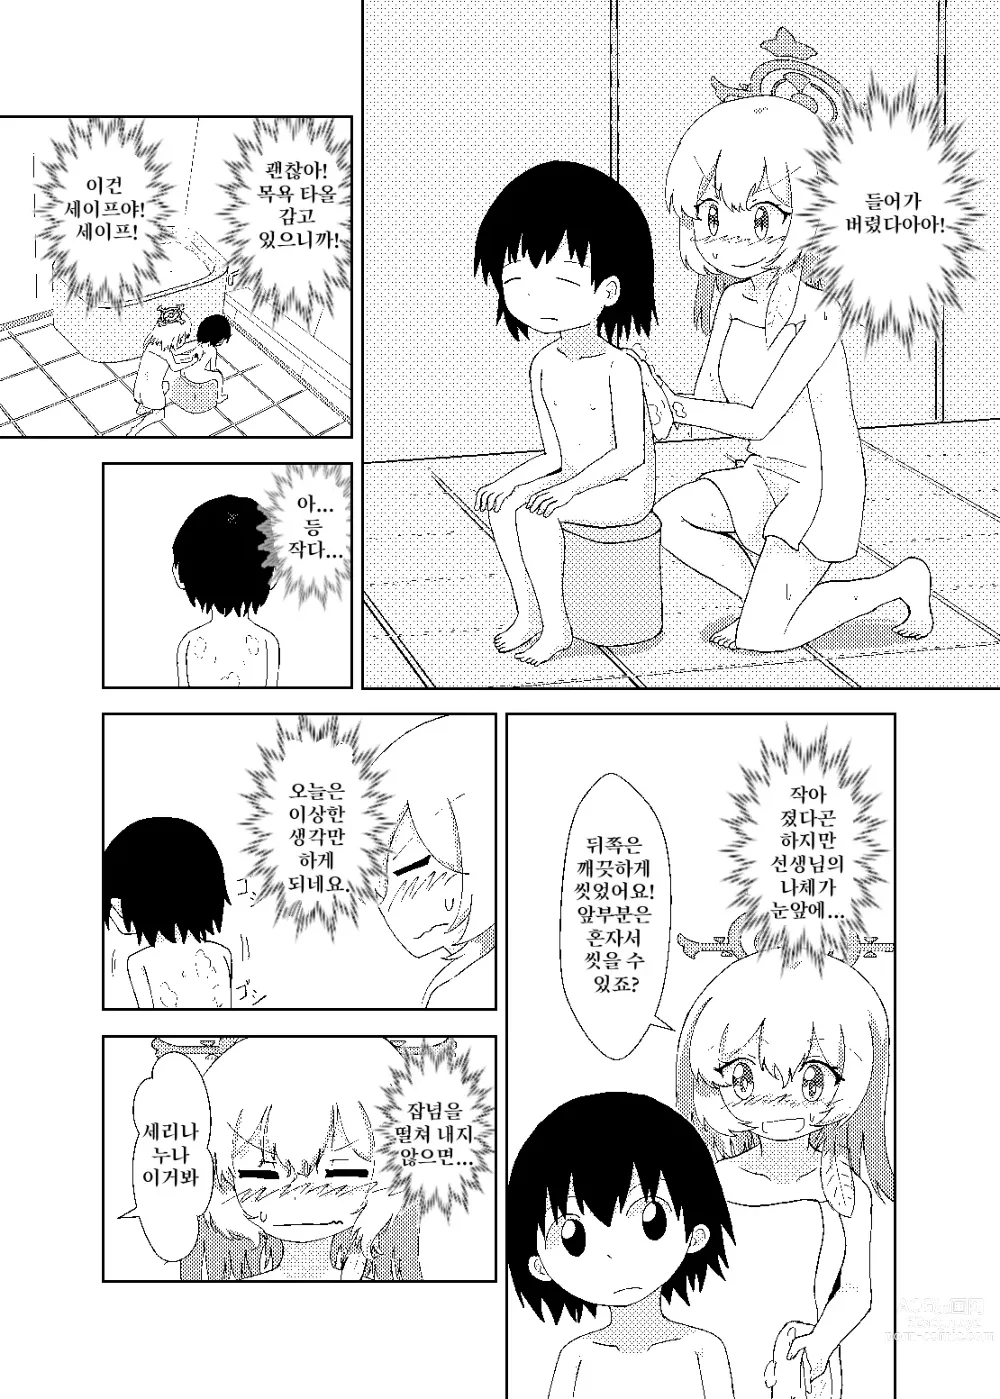 Page 11 of doujinshi 세리나가 유아화 선생님을 간호하는 이야기